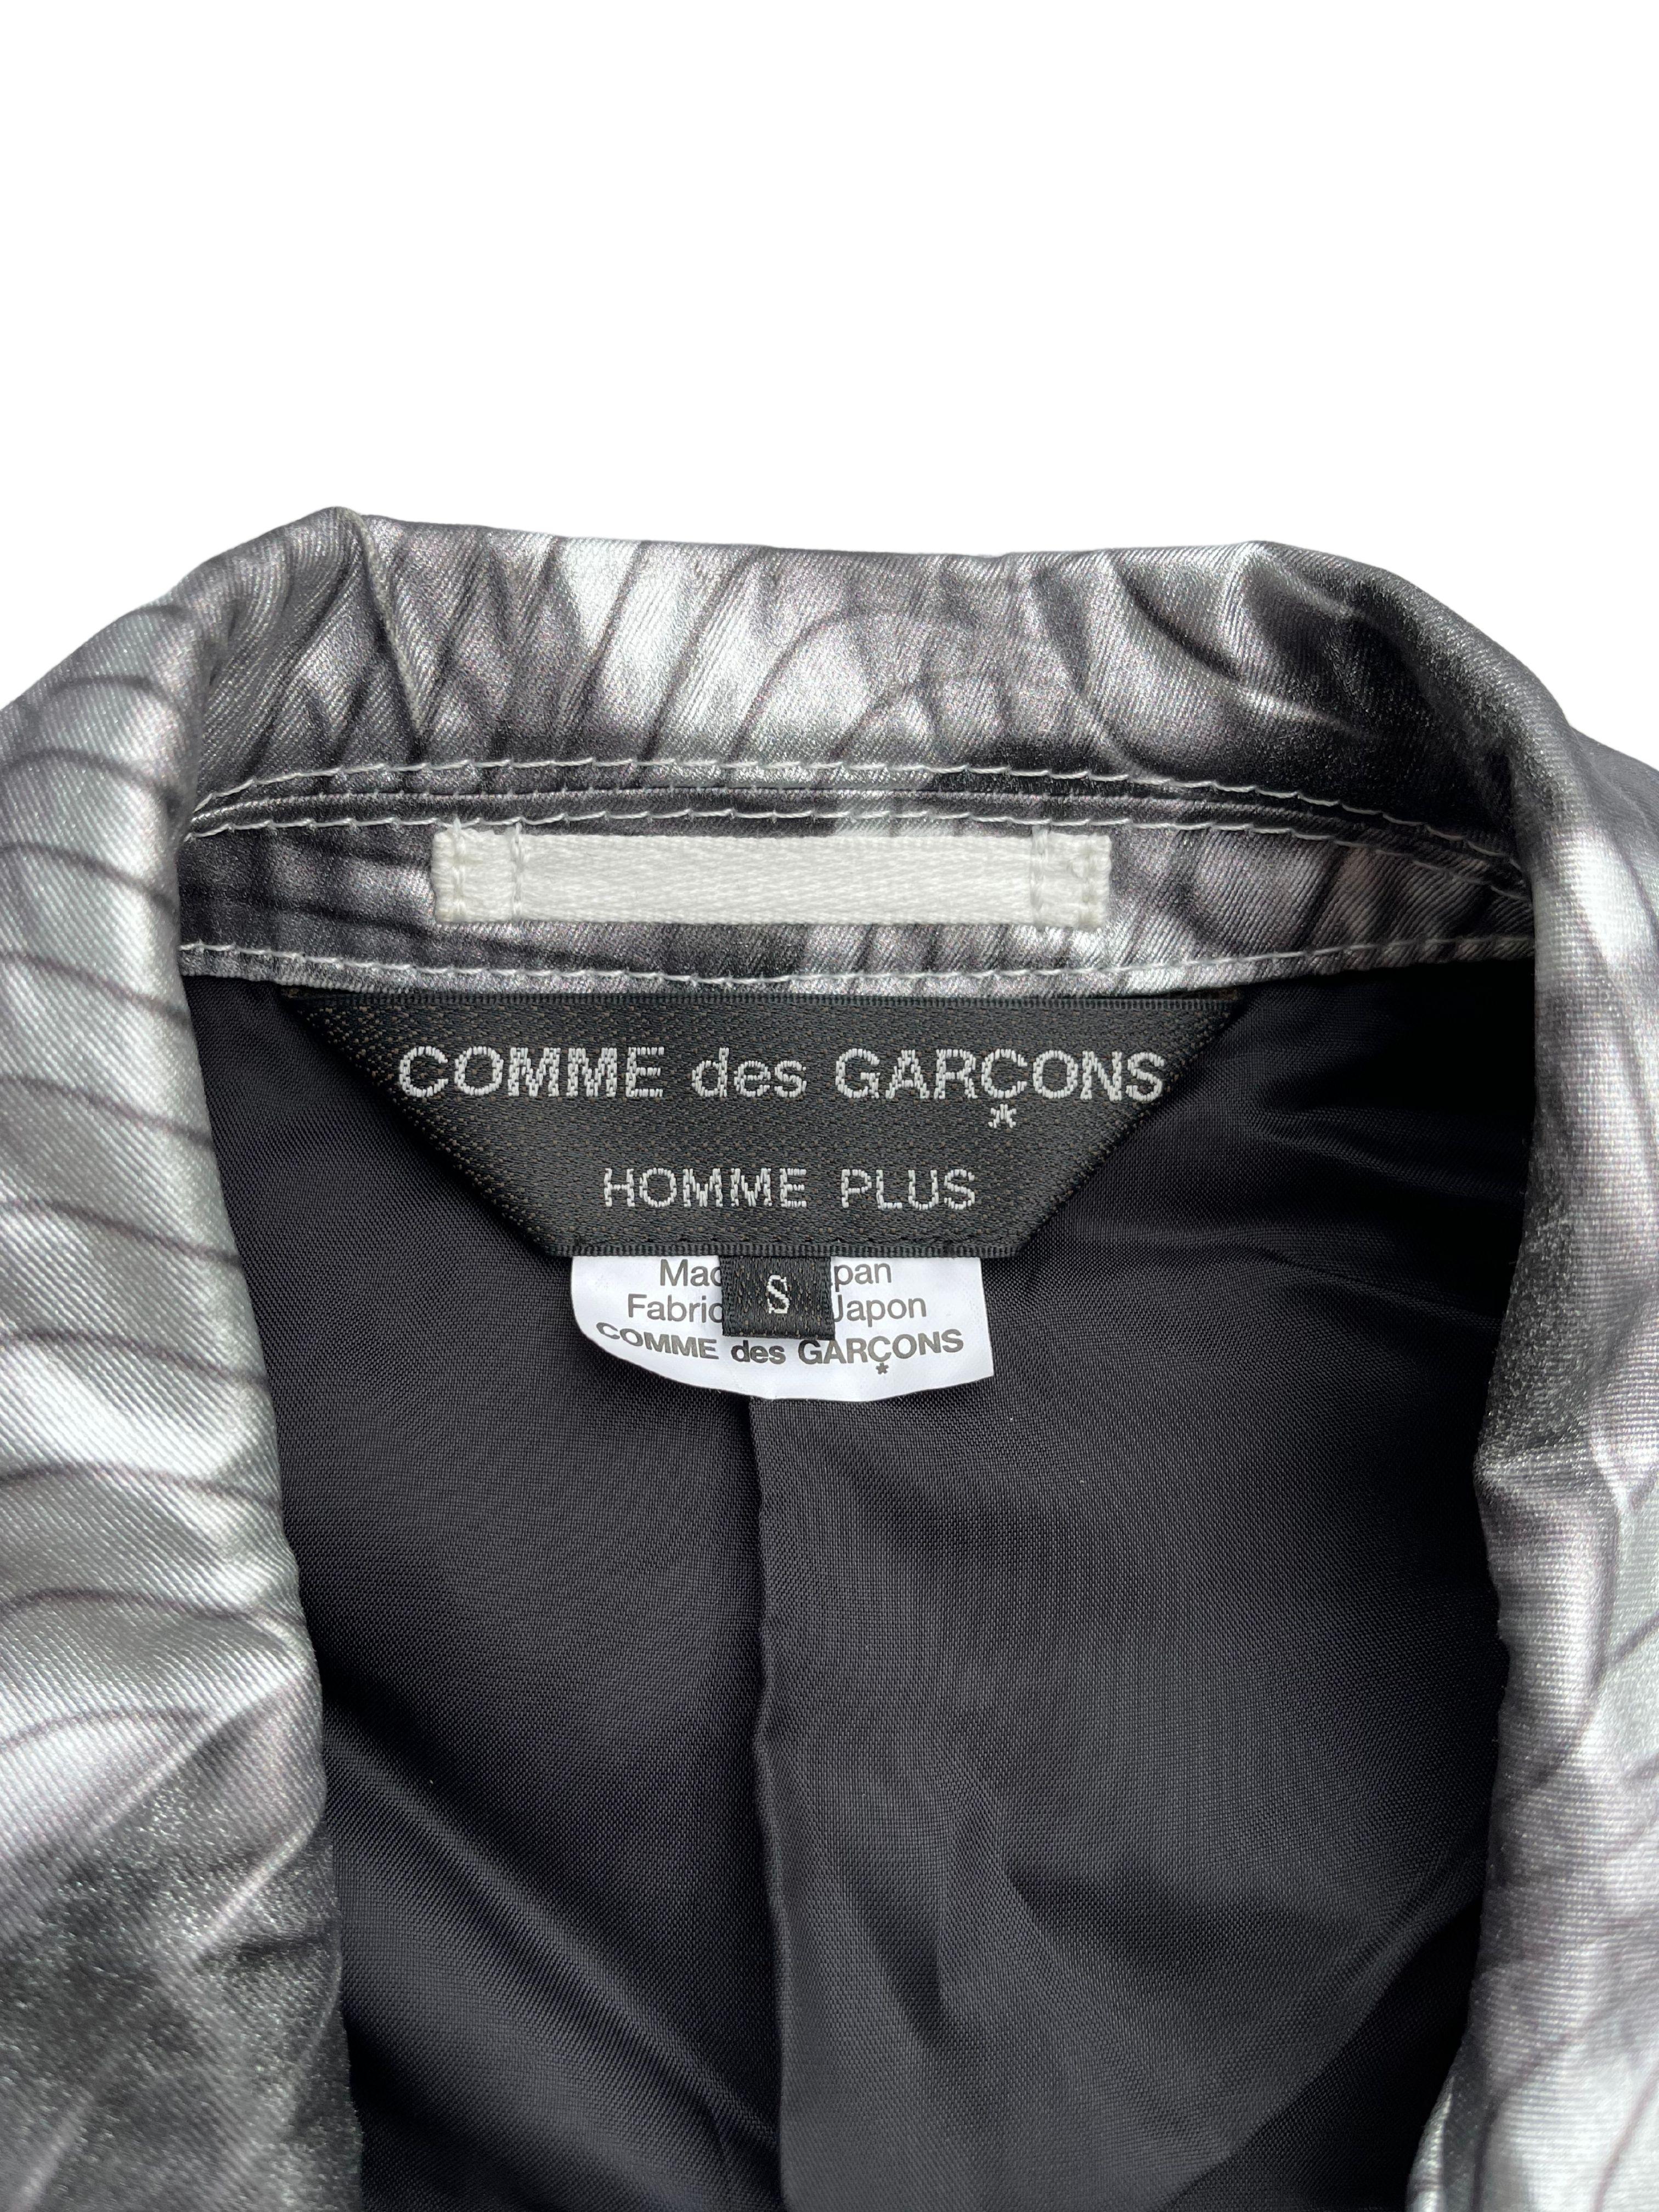 Comme Des Garcons Homme Plus Sheer Metal Riders Jacket, Spring Summer 2021 For Sale 4